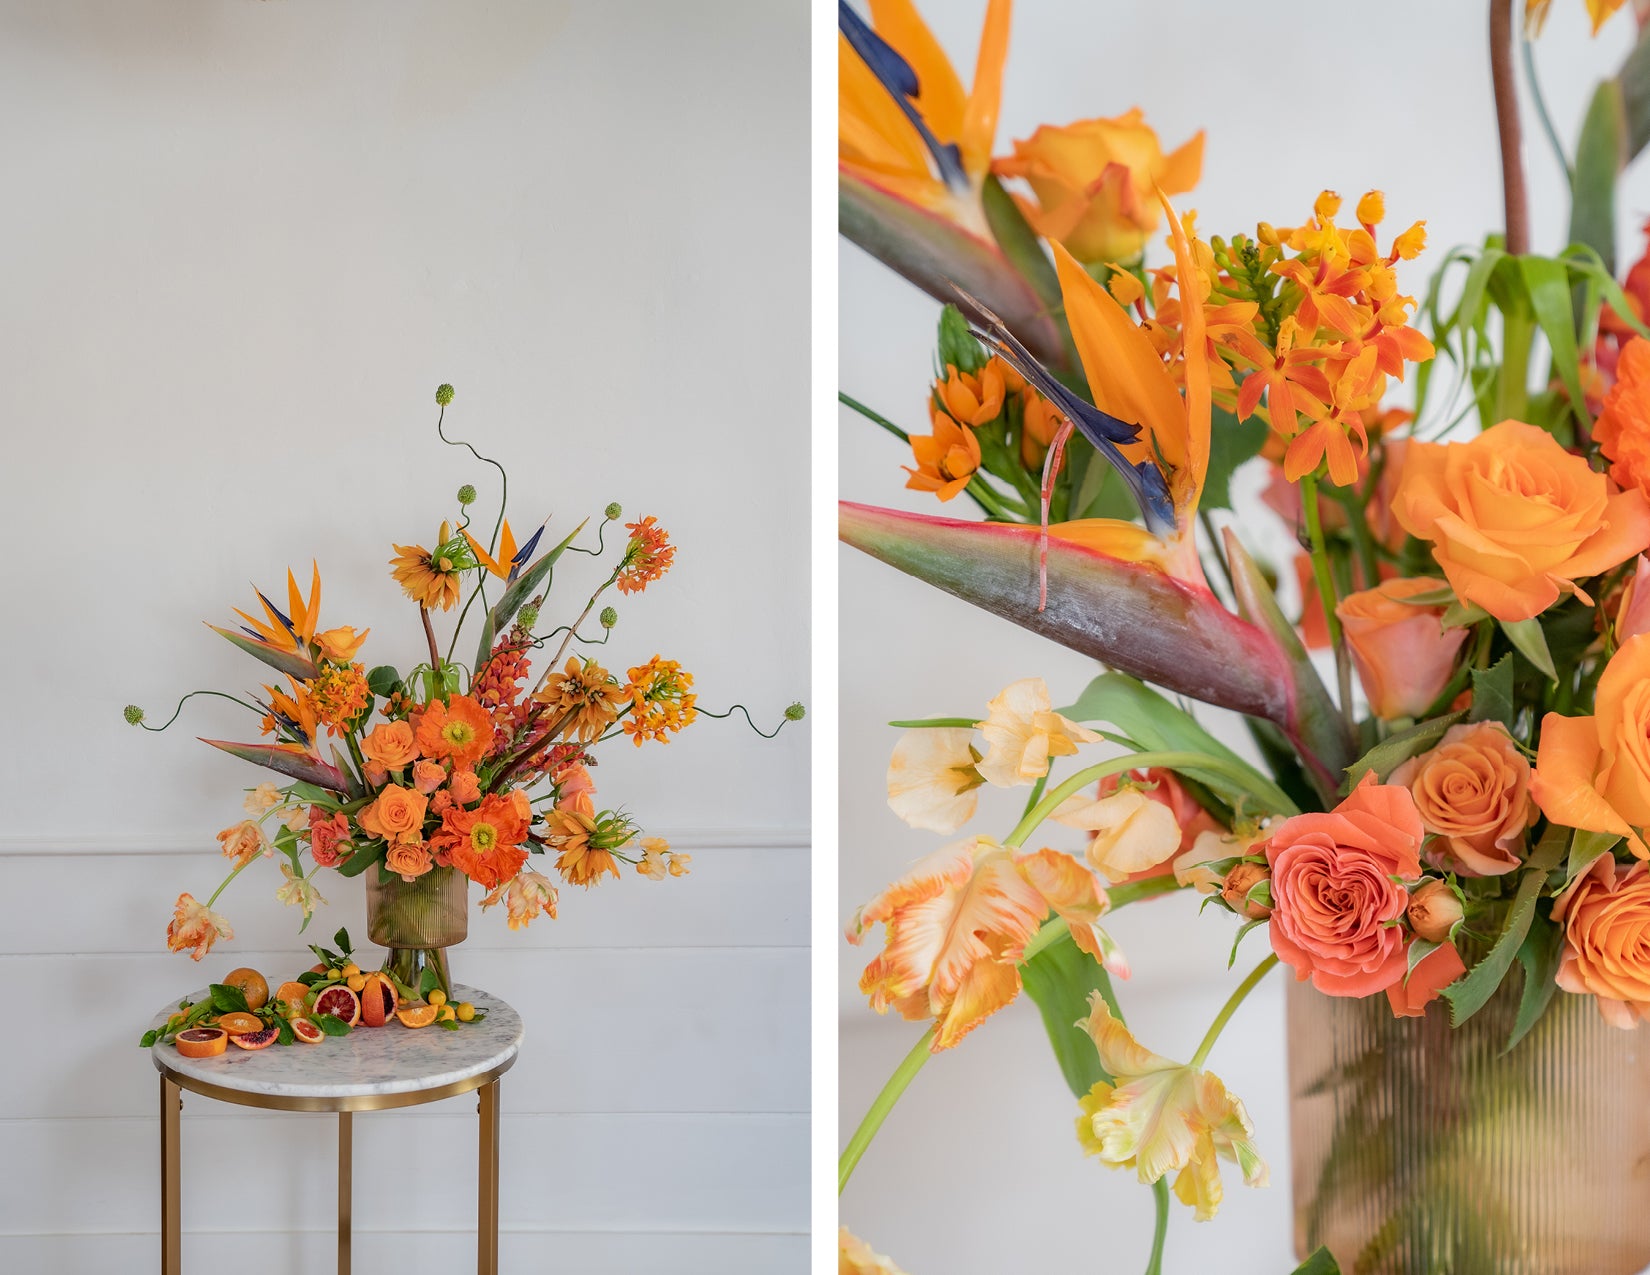 wildflora custom vase blog orange flowers poppy fritillaria snapdragon rose bird of paradise tropical citrus